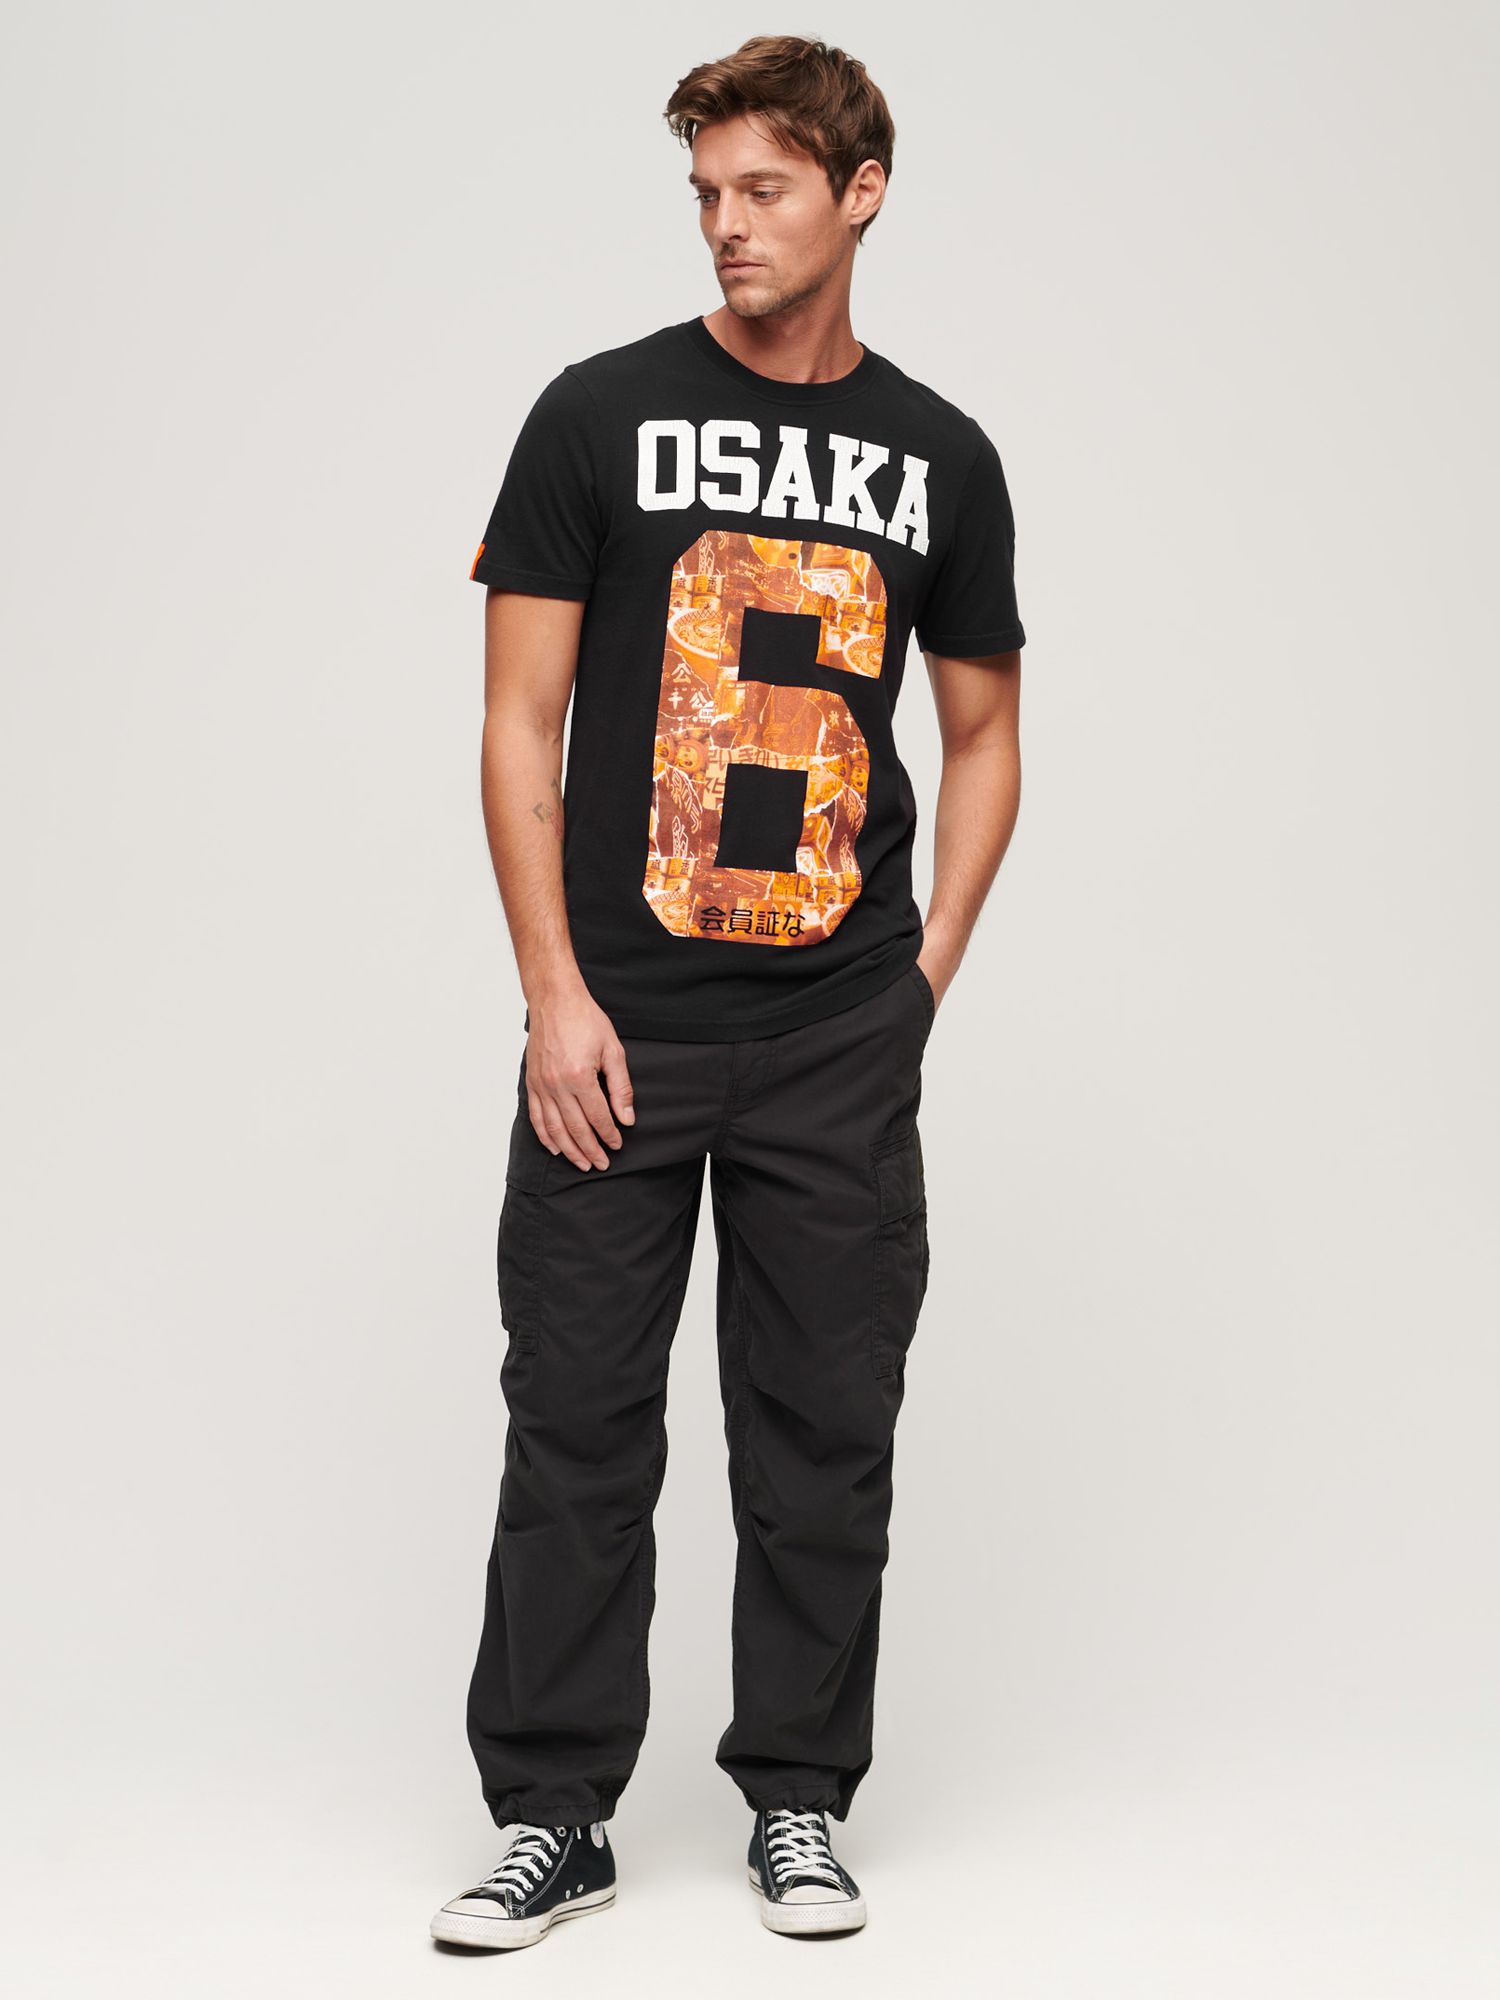 Buy Superdry Osaka 6 City Standard T-Shirt, Black/Multi Online at johnlewis.com